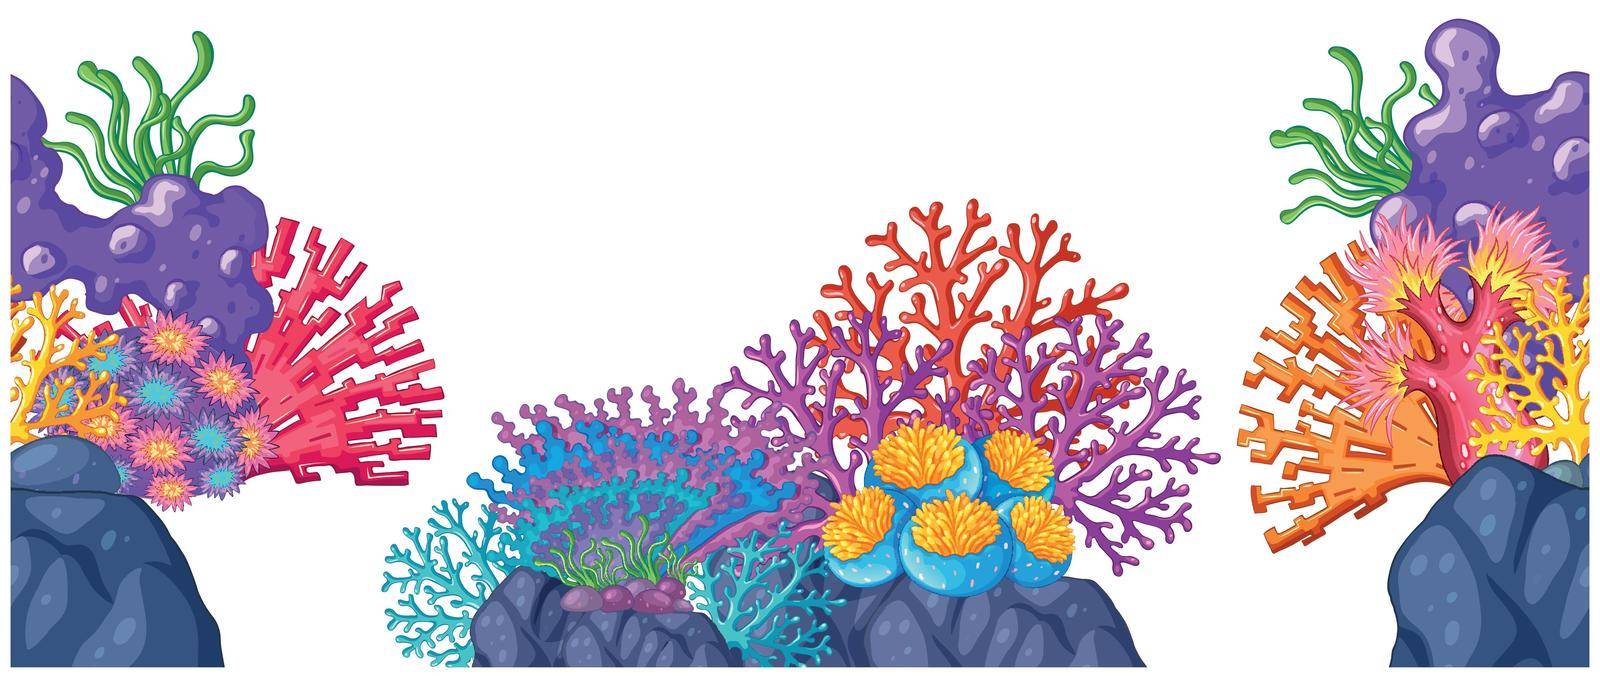 Coral reef on the rocks illustration